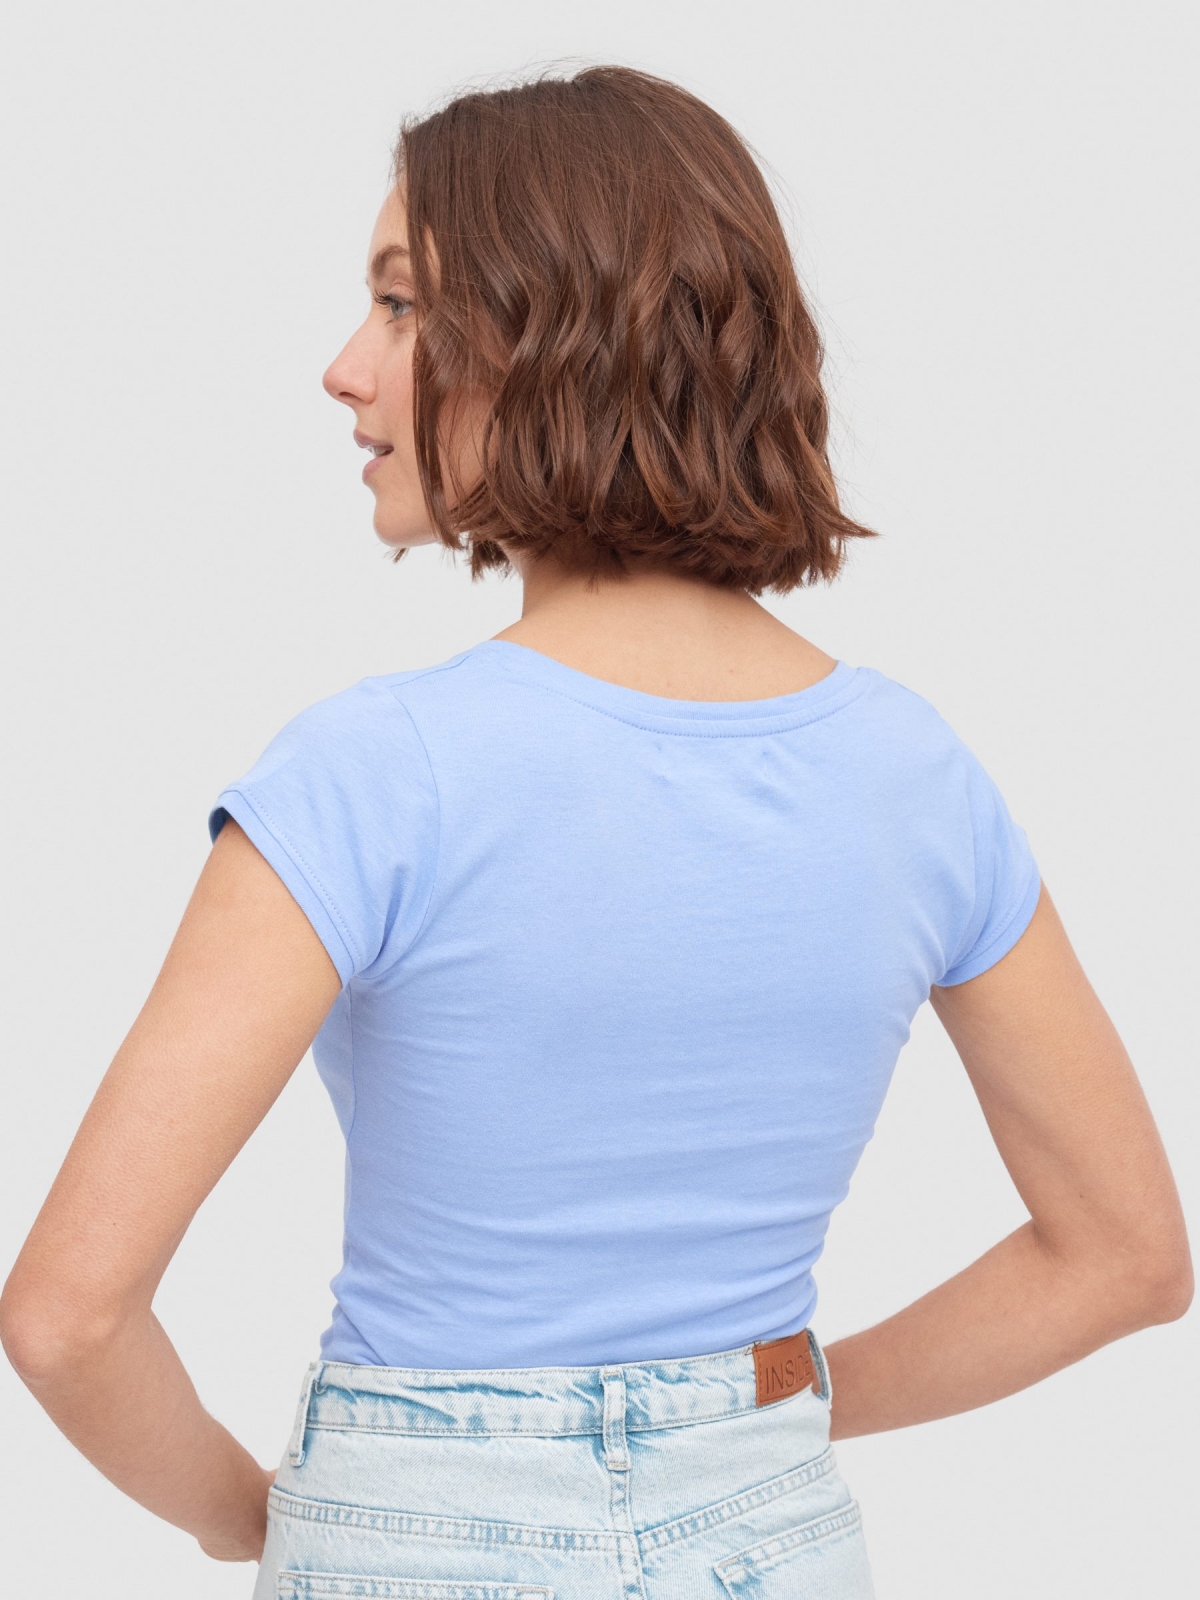 Camiseta Kawaii azul vista media trasera